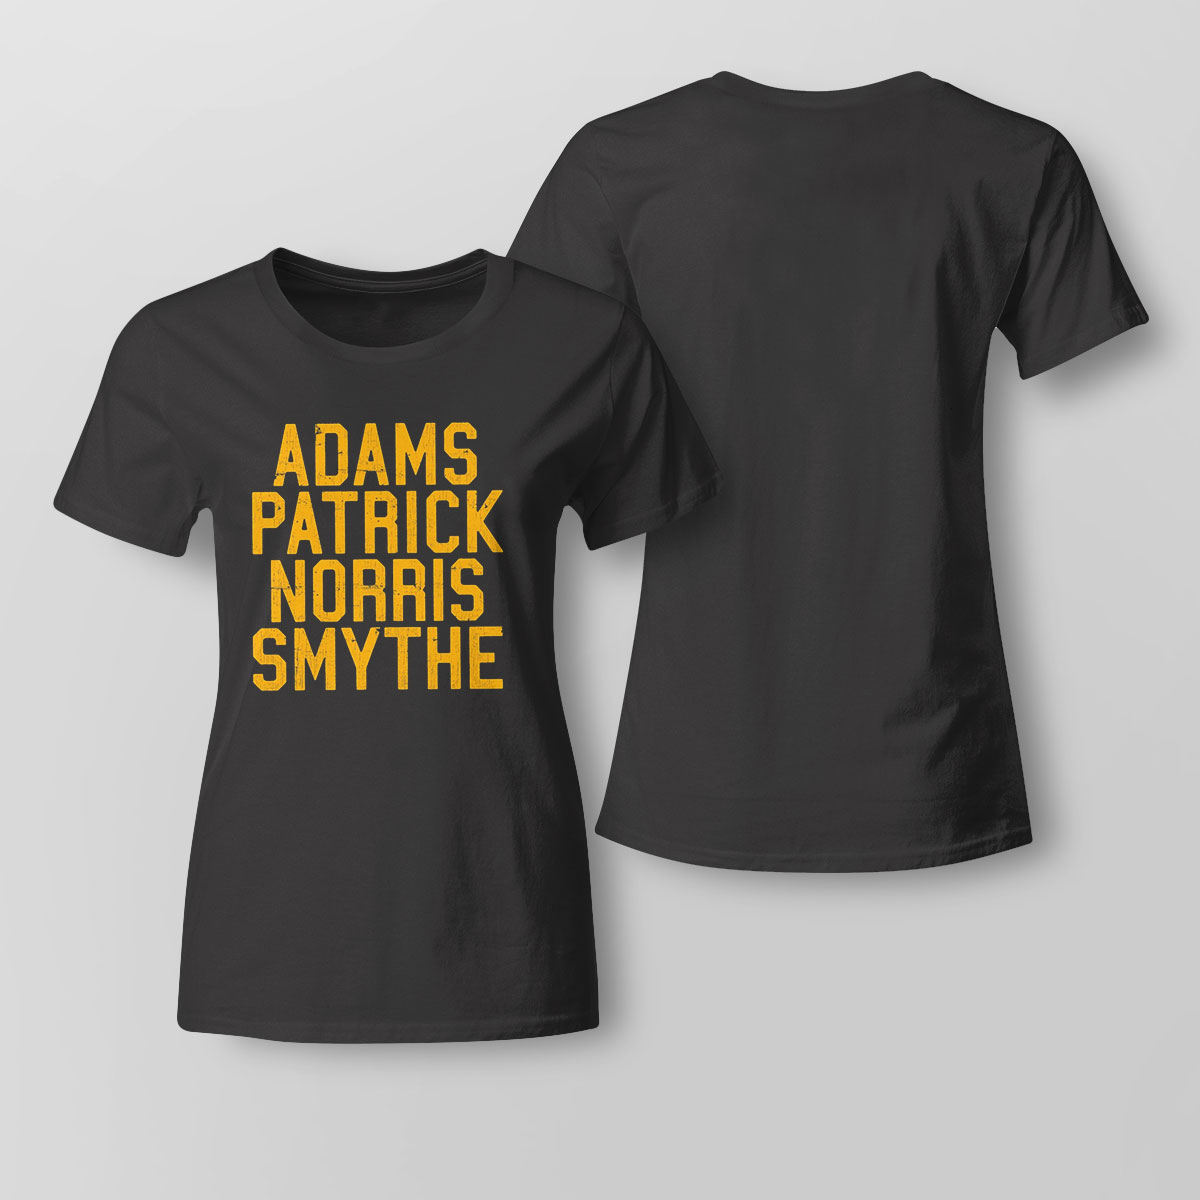 Adams Patrick Norris Smythe 2022 Shirt Long Sleeve, Tank Top